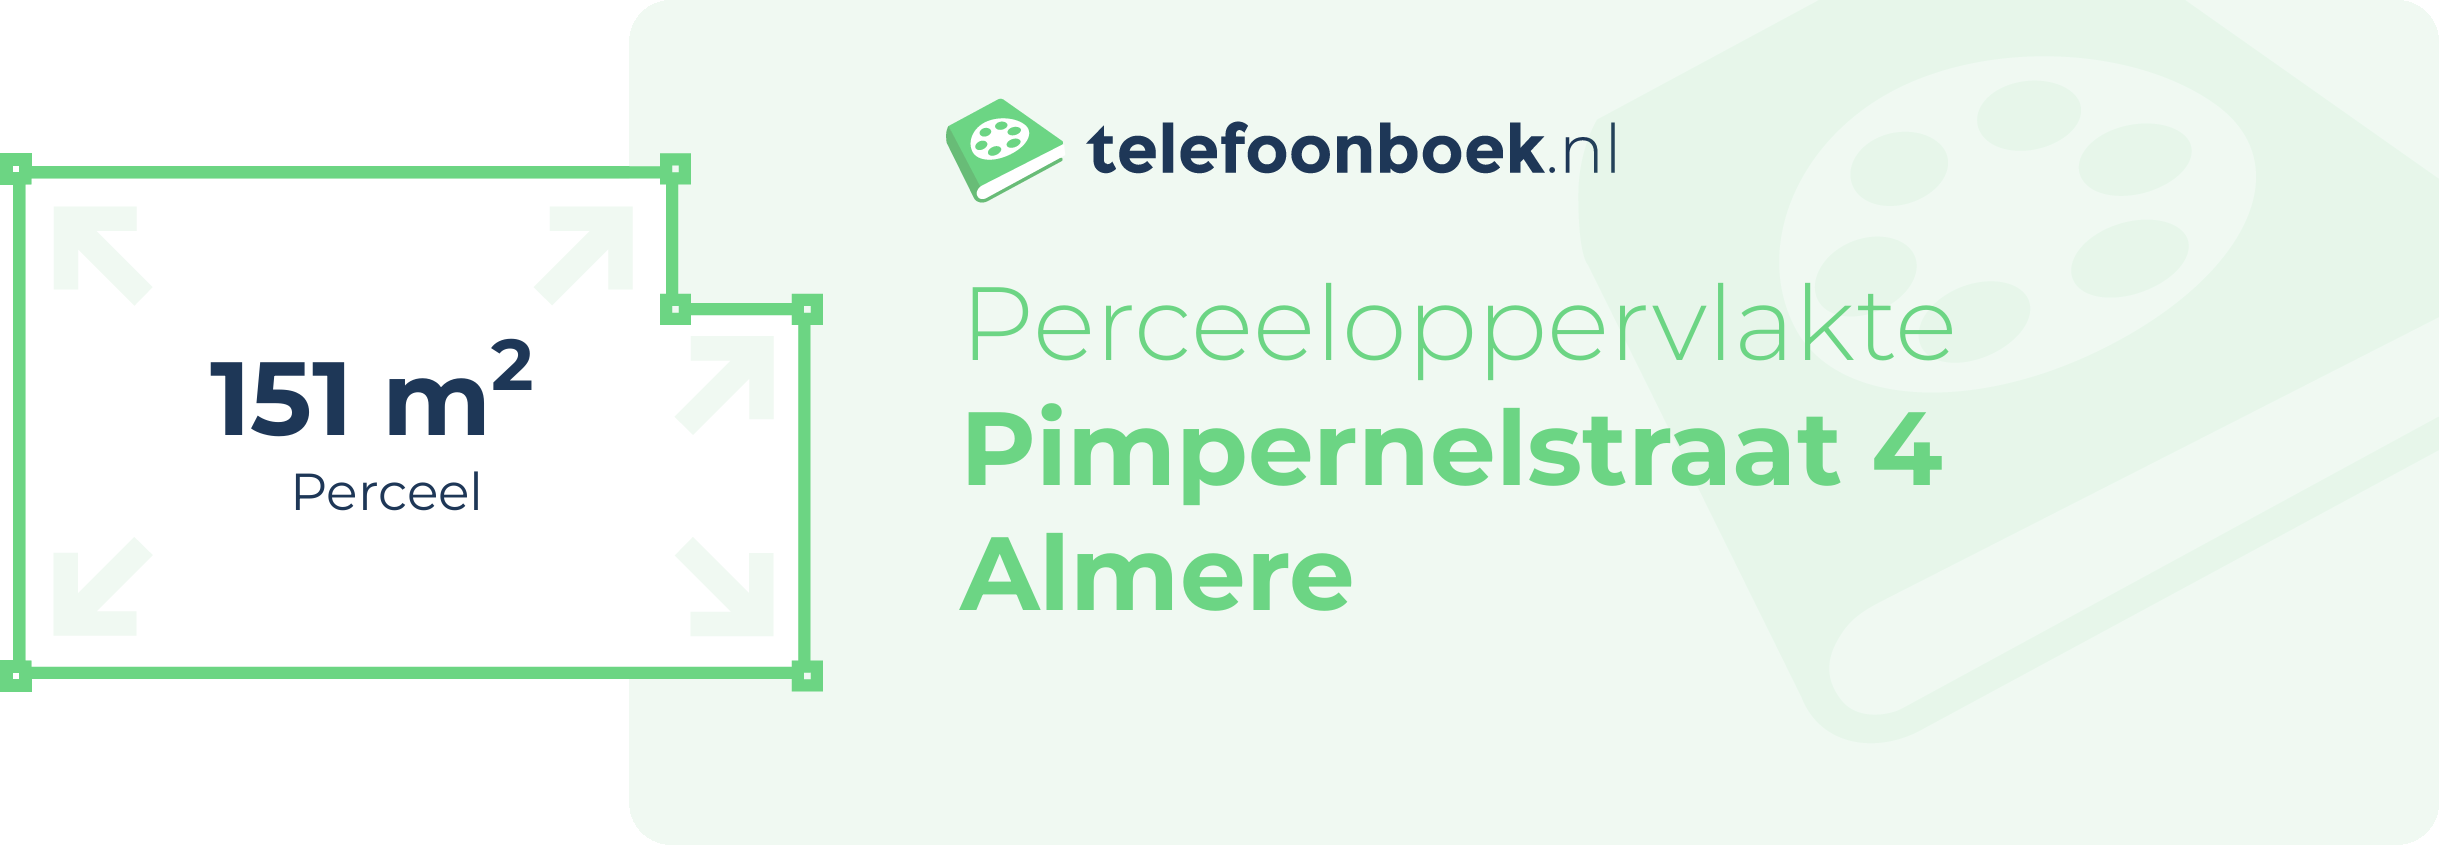 Perceeloppervlakte Pimpernelstraat 4 Almere